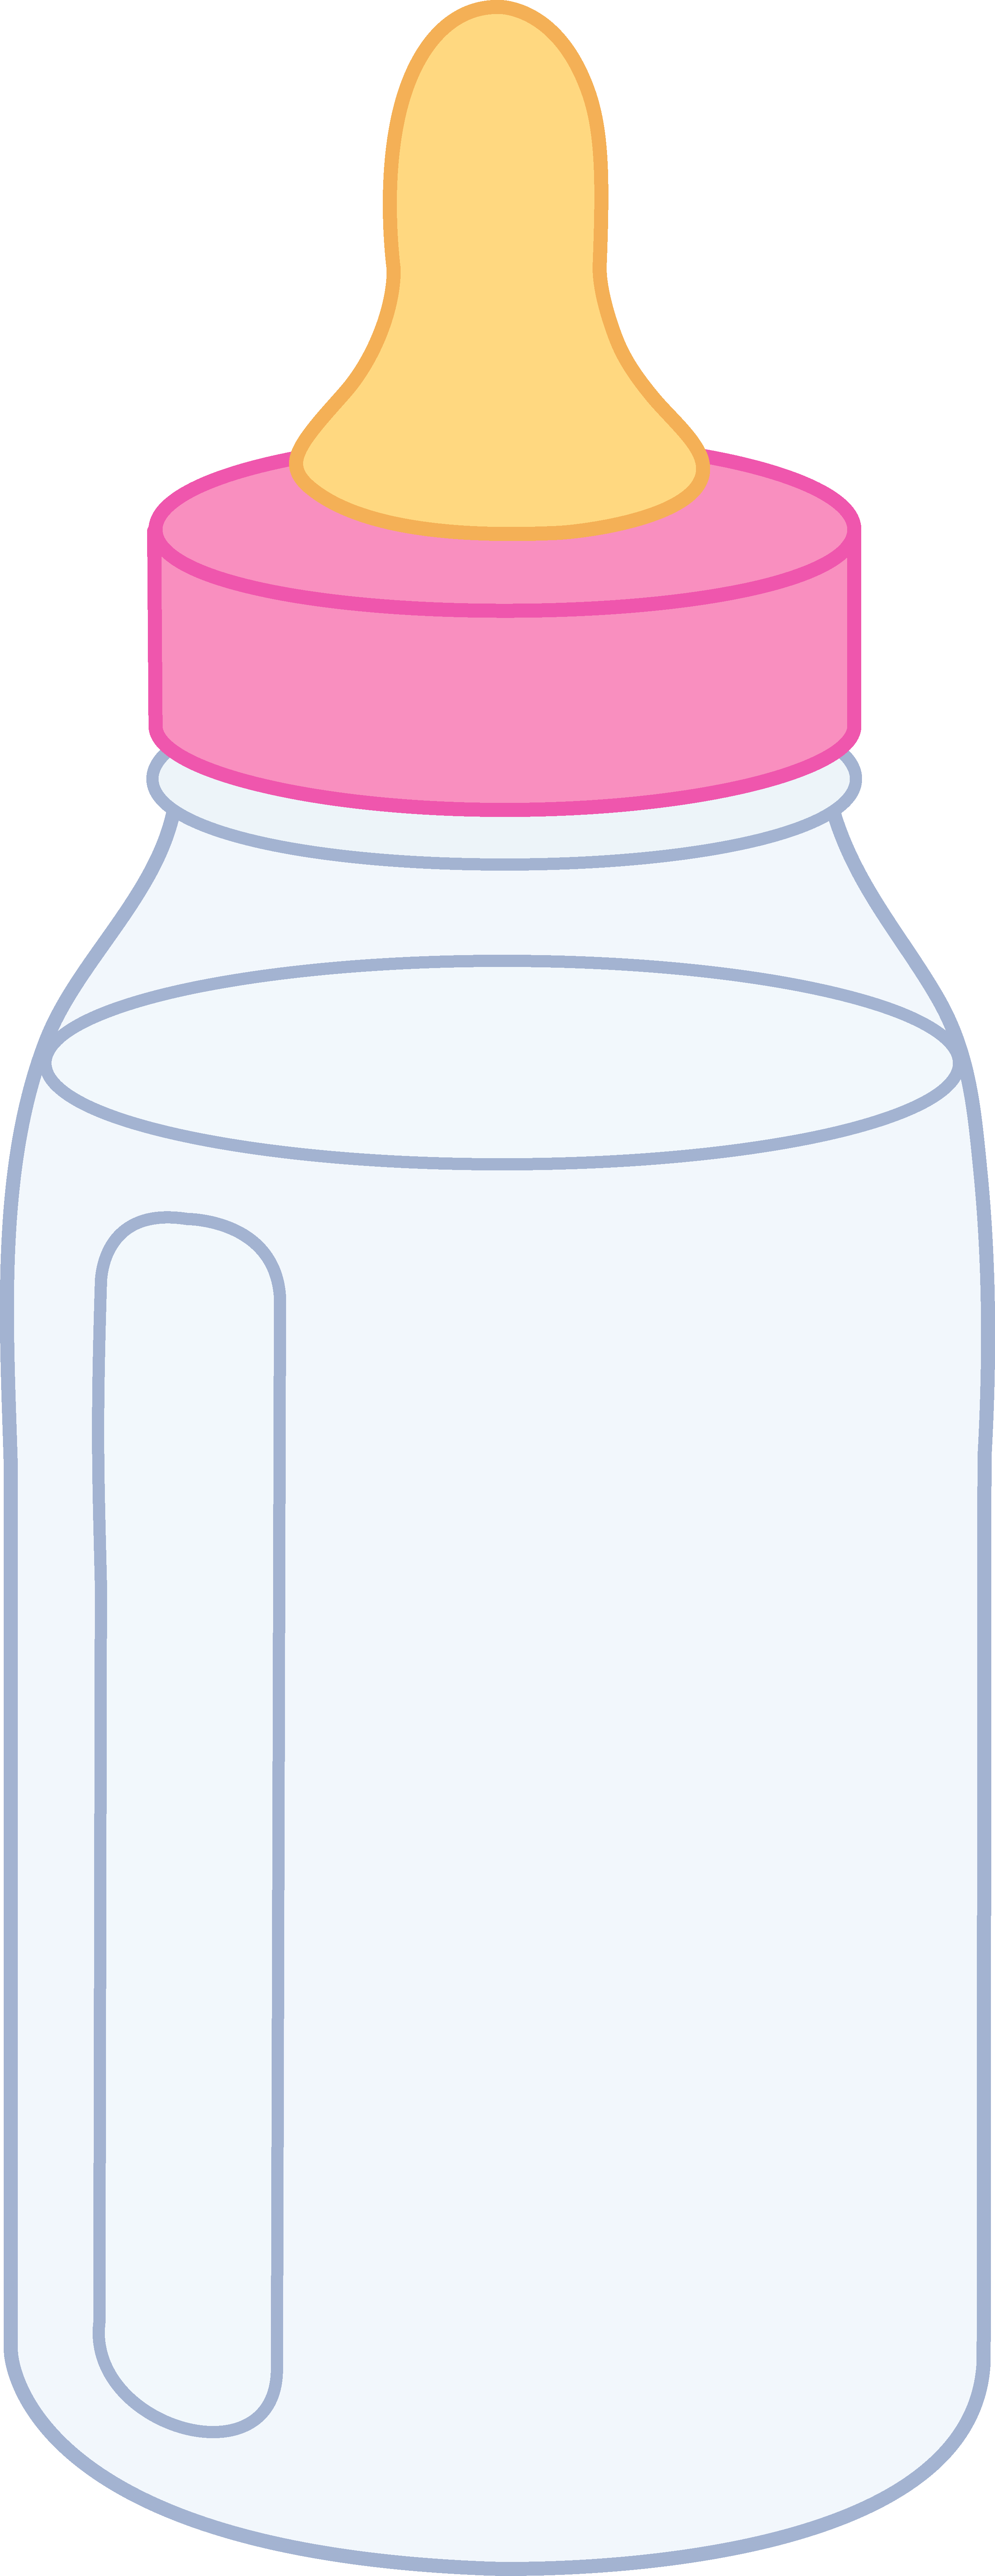 Infant clipart baby milk bottle, Picture #1407036 infant clipart baby